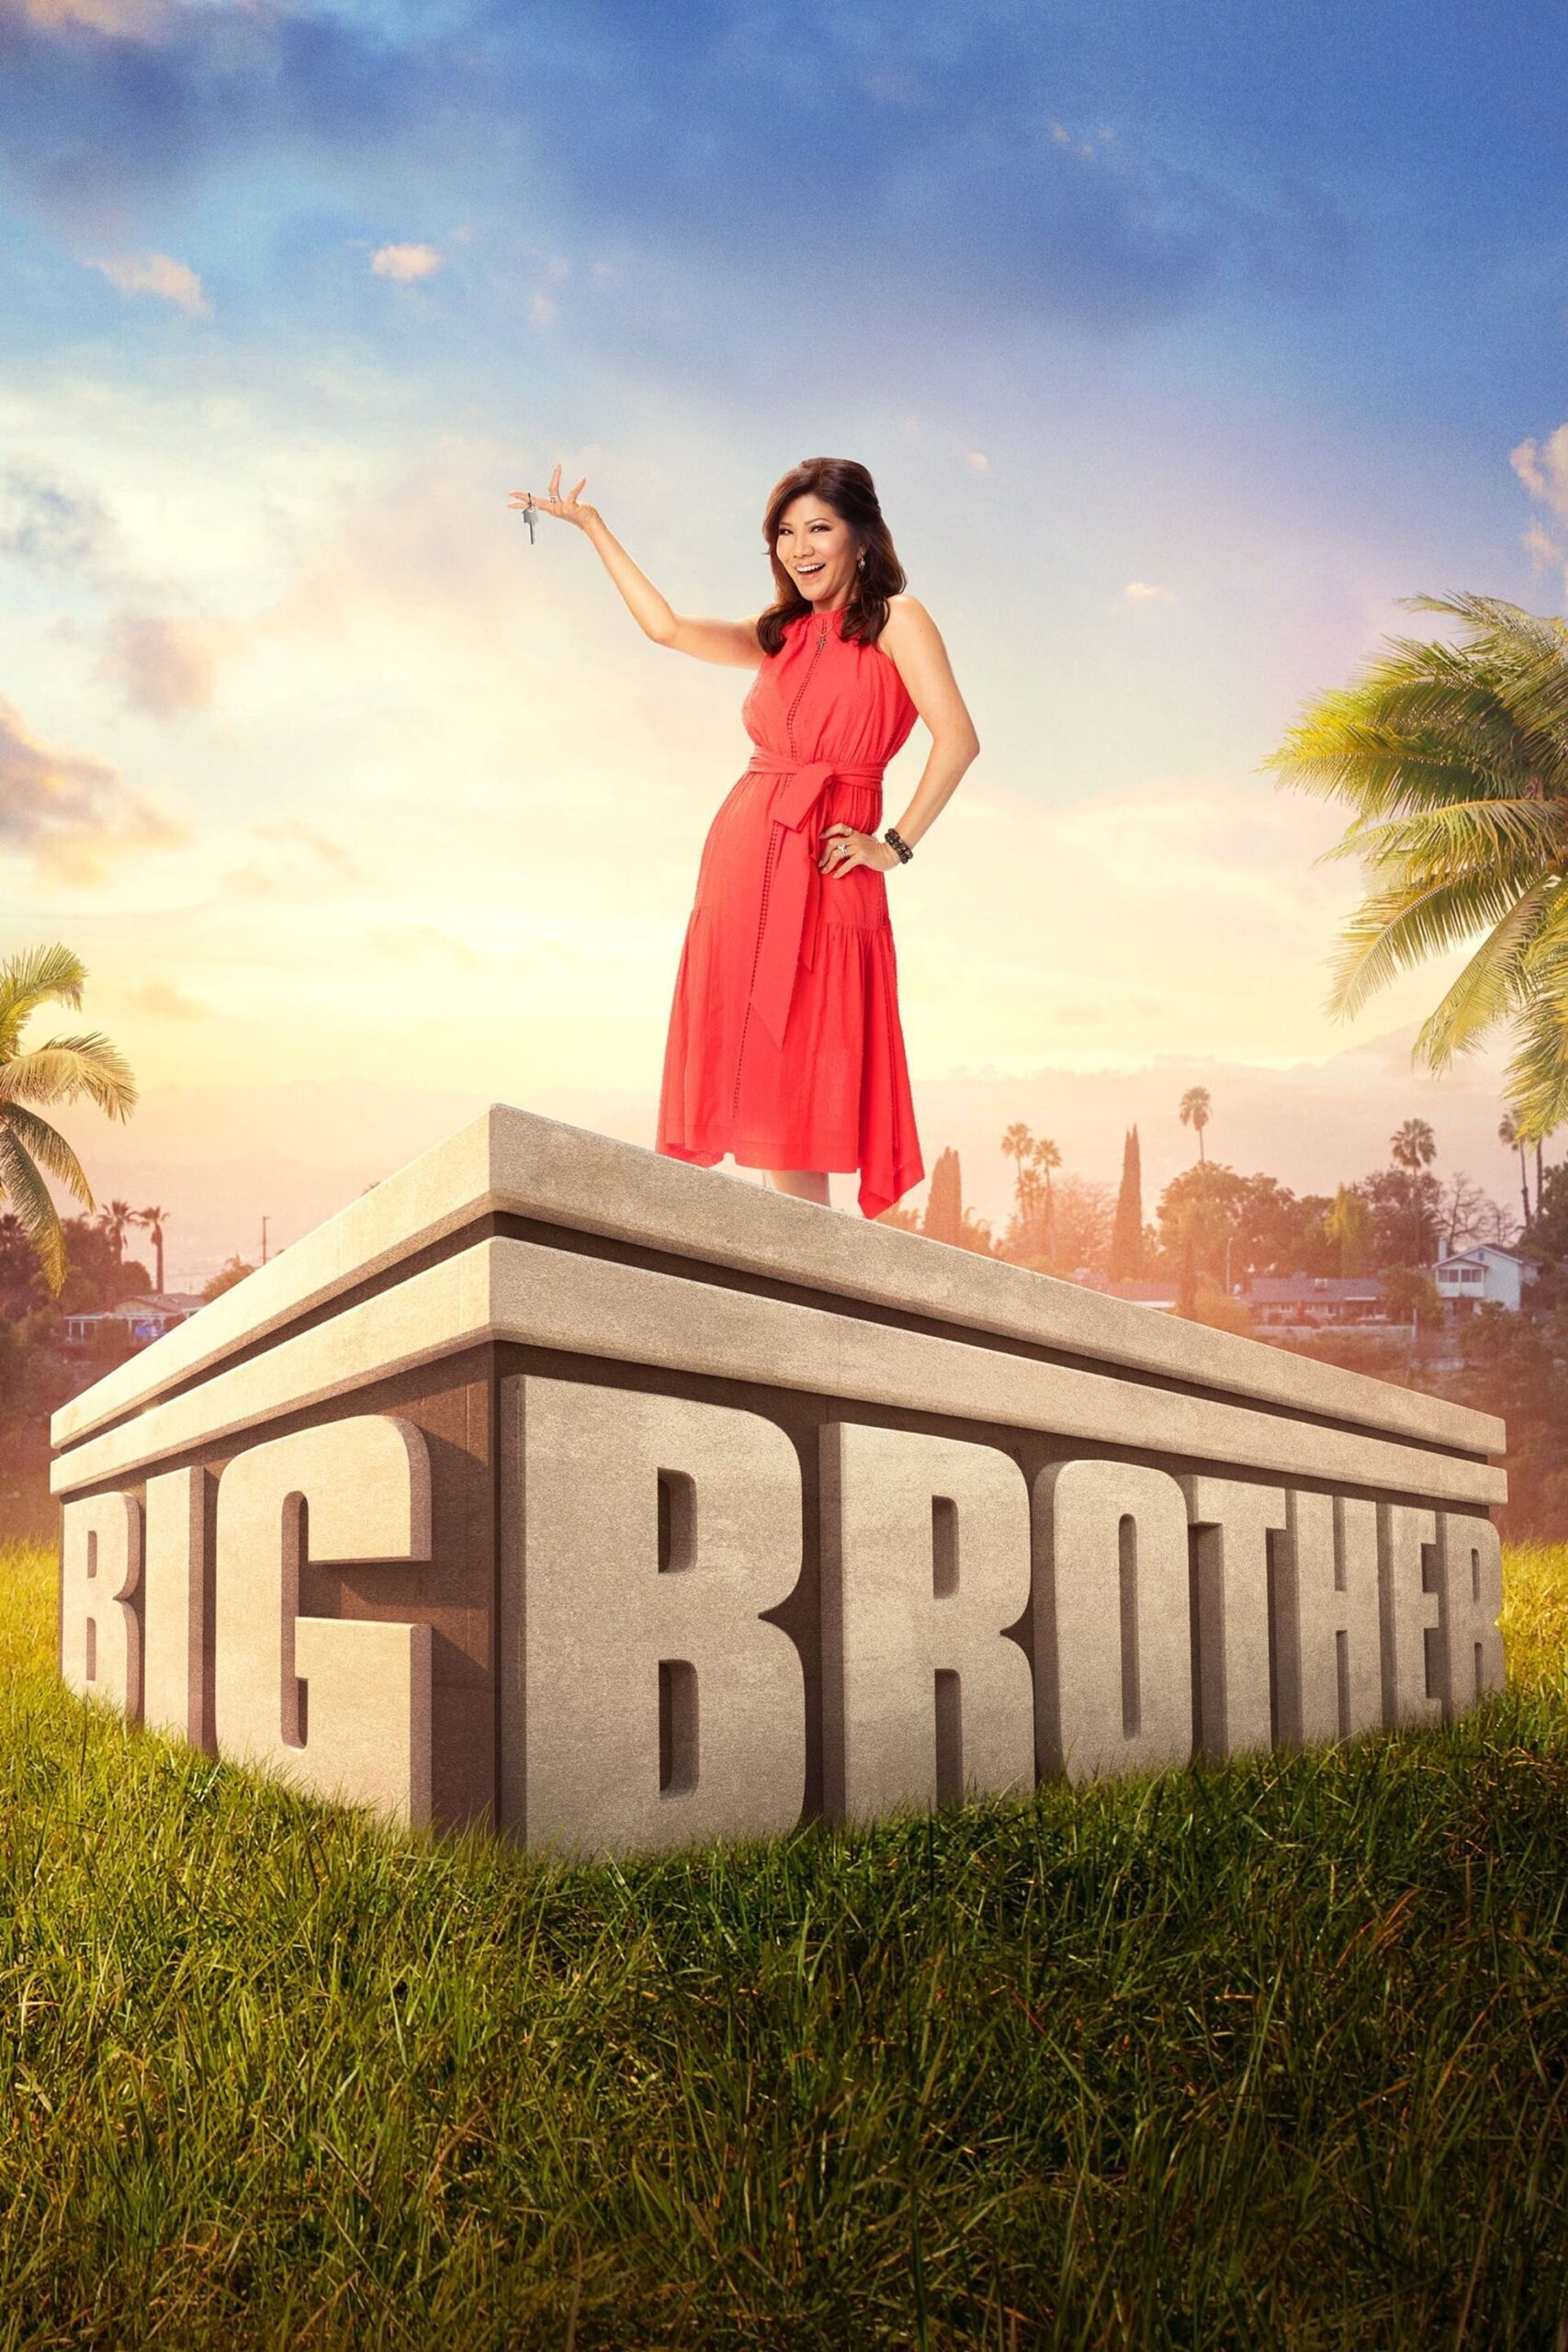 Big Brother Season 24 Episode 11 Release Date